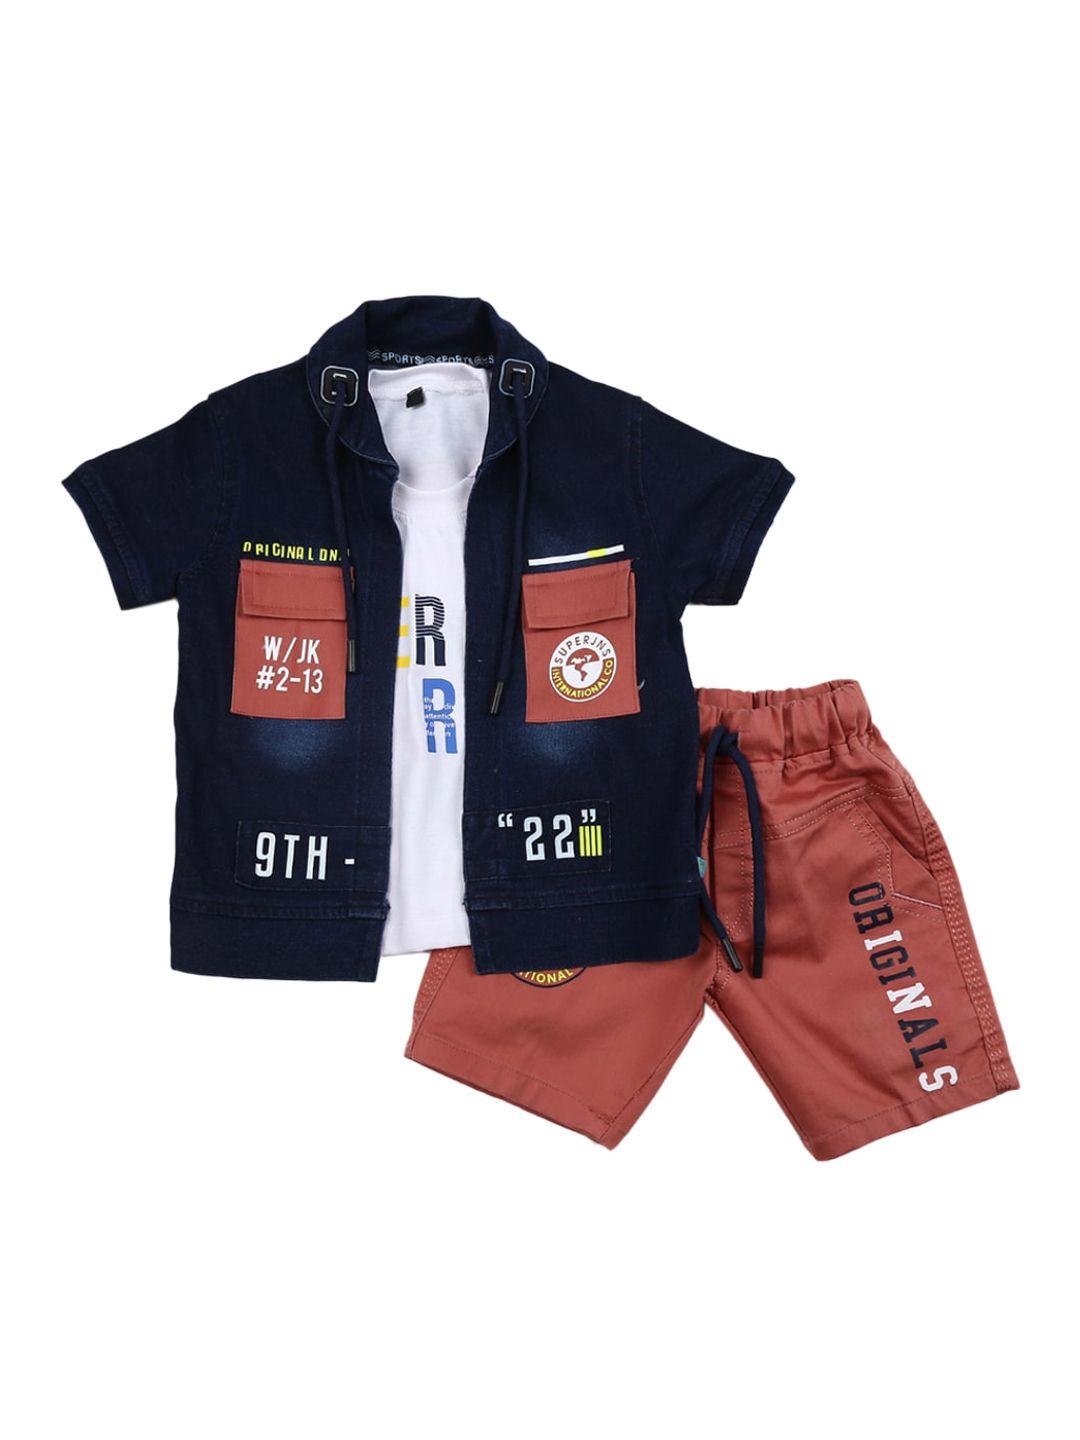 v-mart unisex kids navy blue clothing set